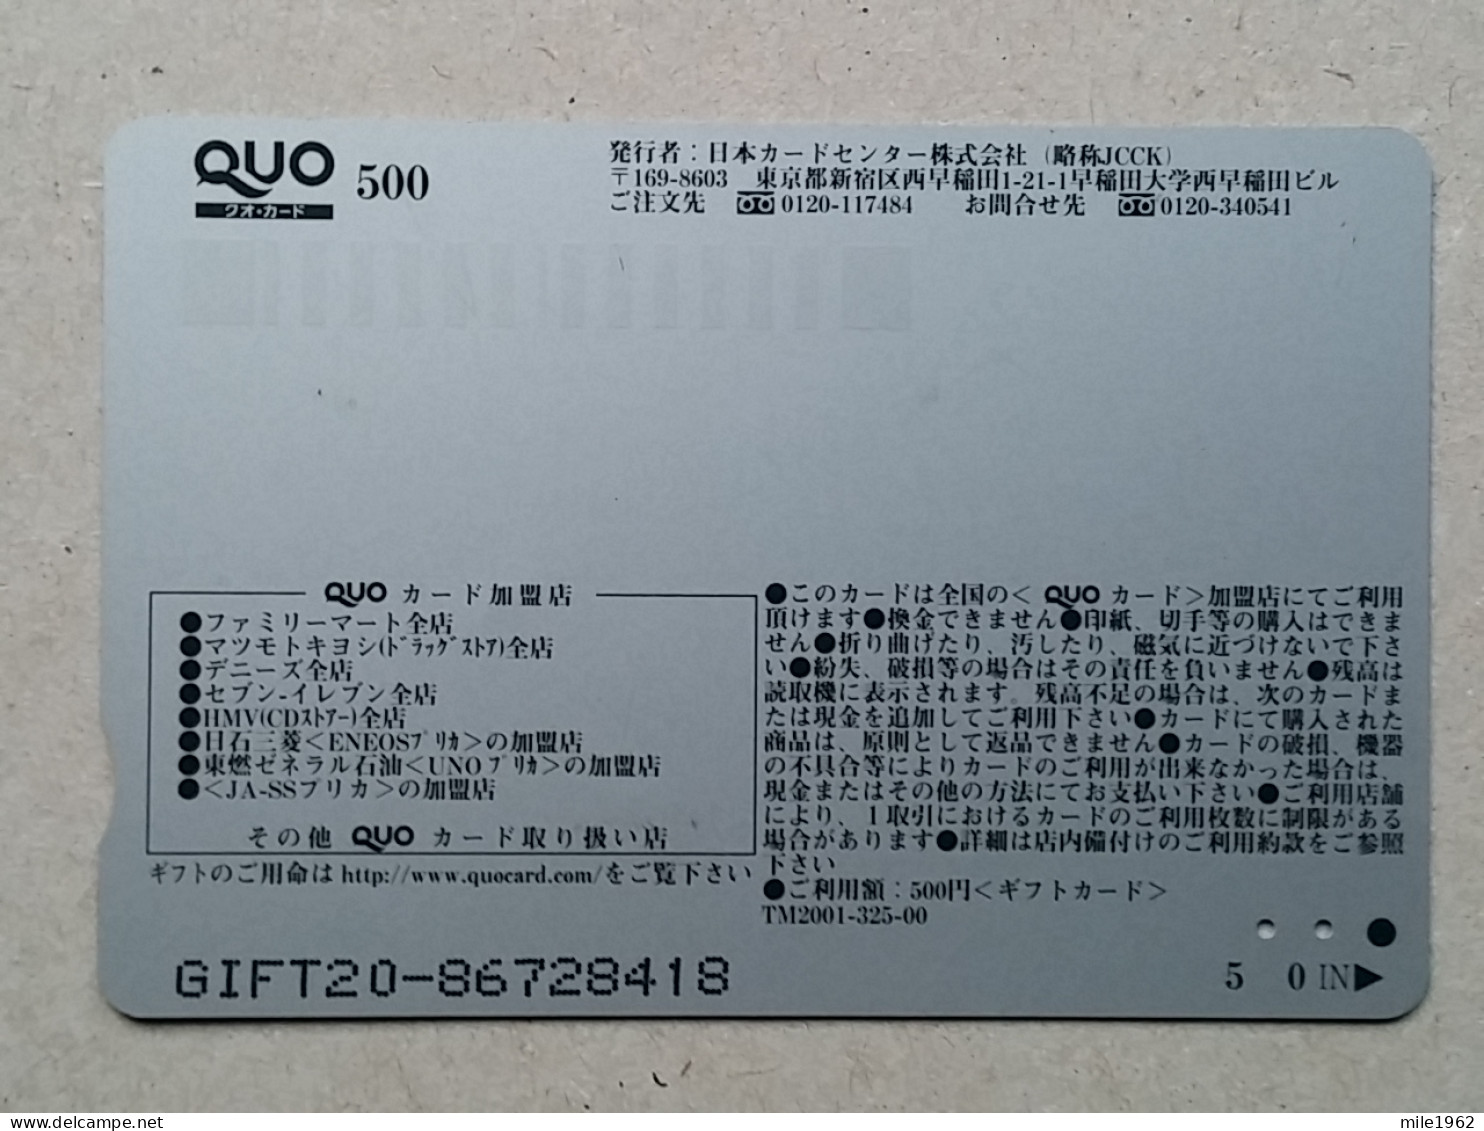 T-202- JAPAN, Japon, Nipon, Carte Prepayee, Prepaid Card, RAILWAY, TRAIN, CHEMIN DE FER - Treni